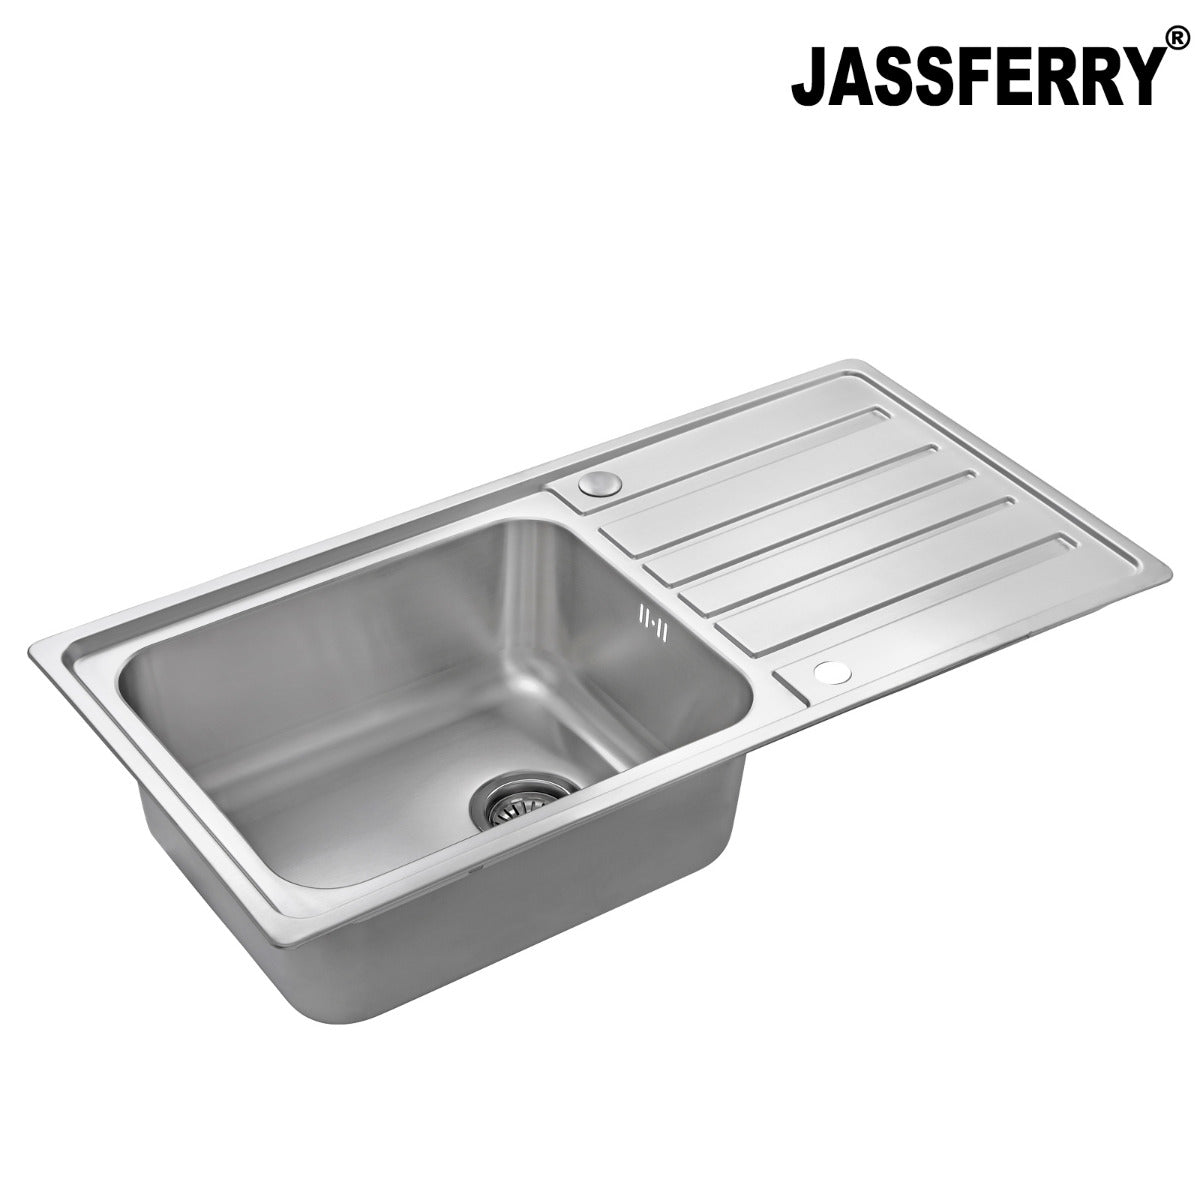 JassferryJASSFERRY Welding Stainless Steel Kitchen Sink Single Large Bowl Reversible DrainerKitchen Sinks